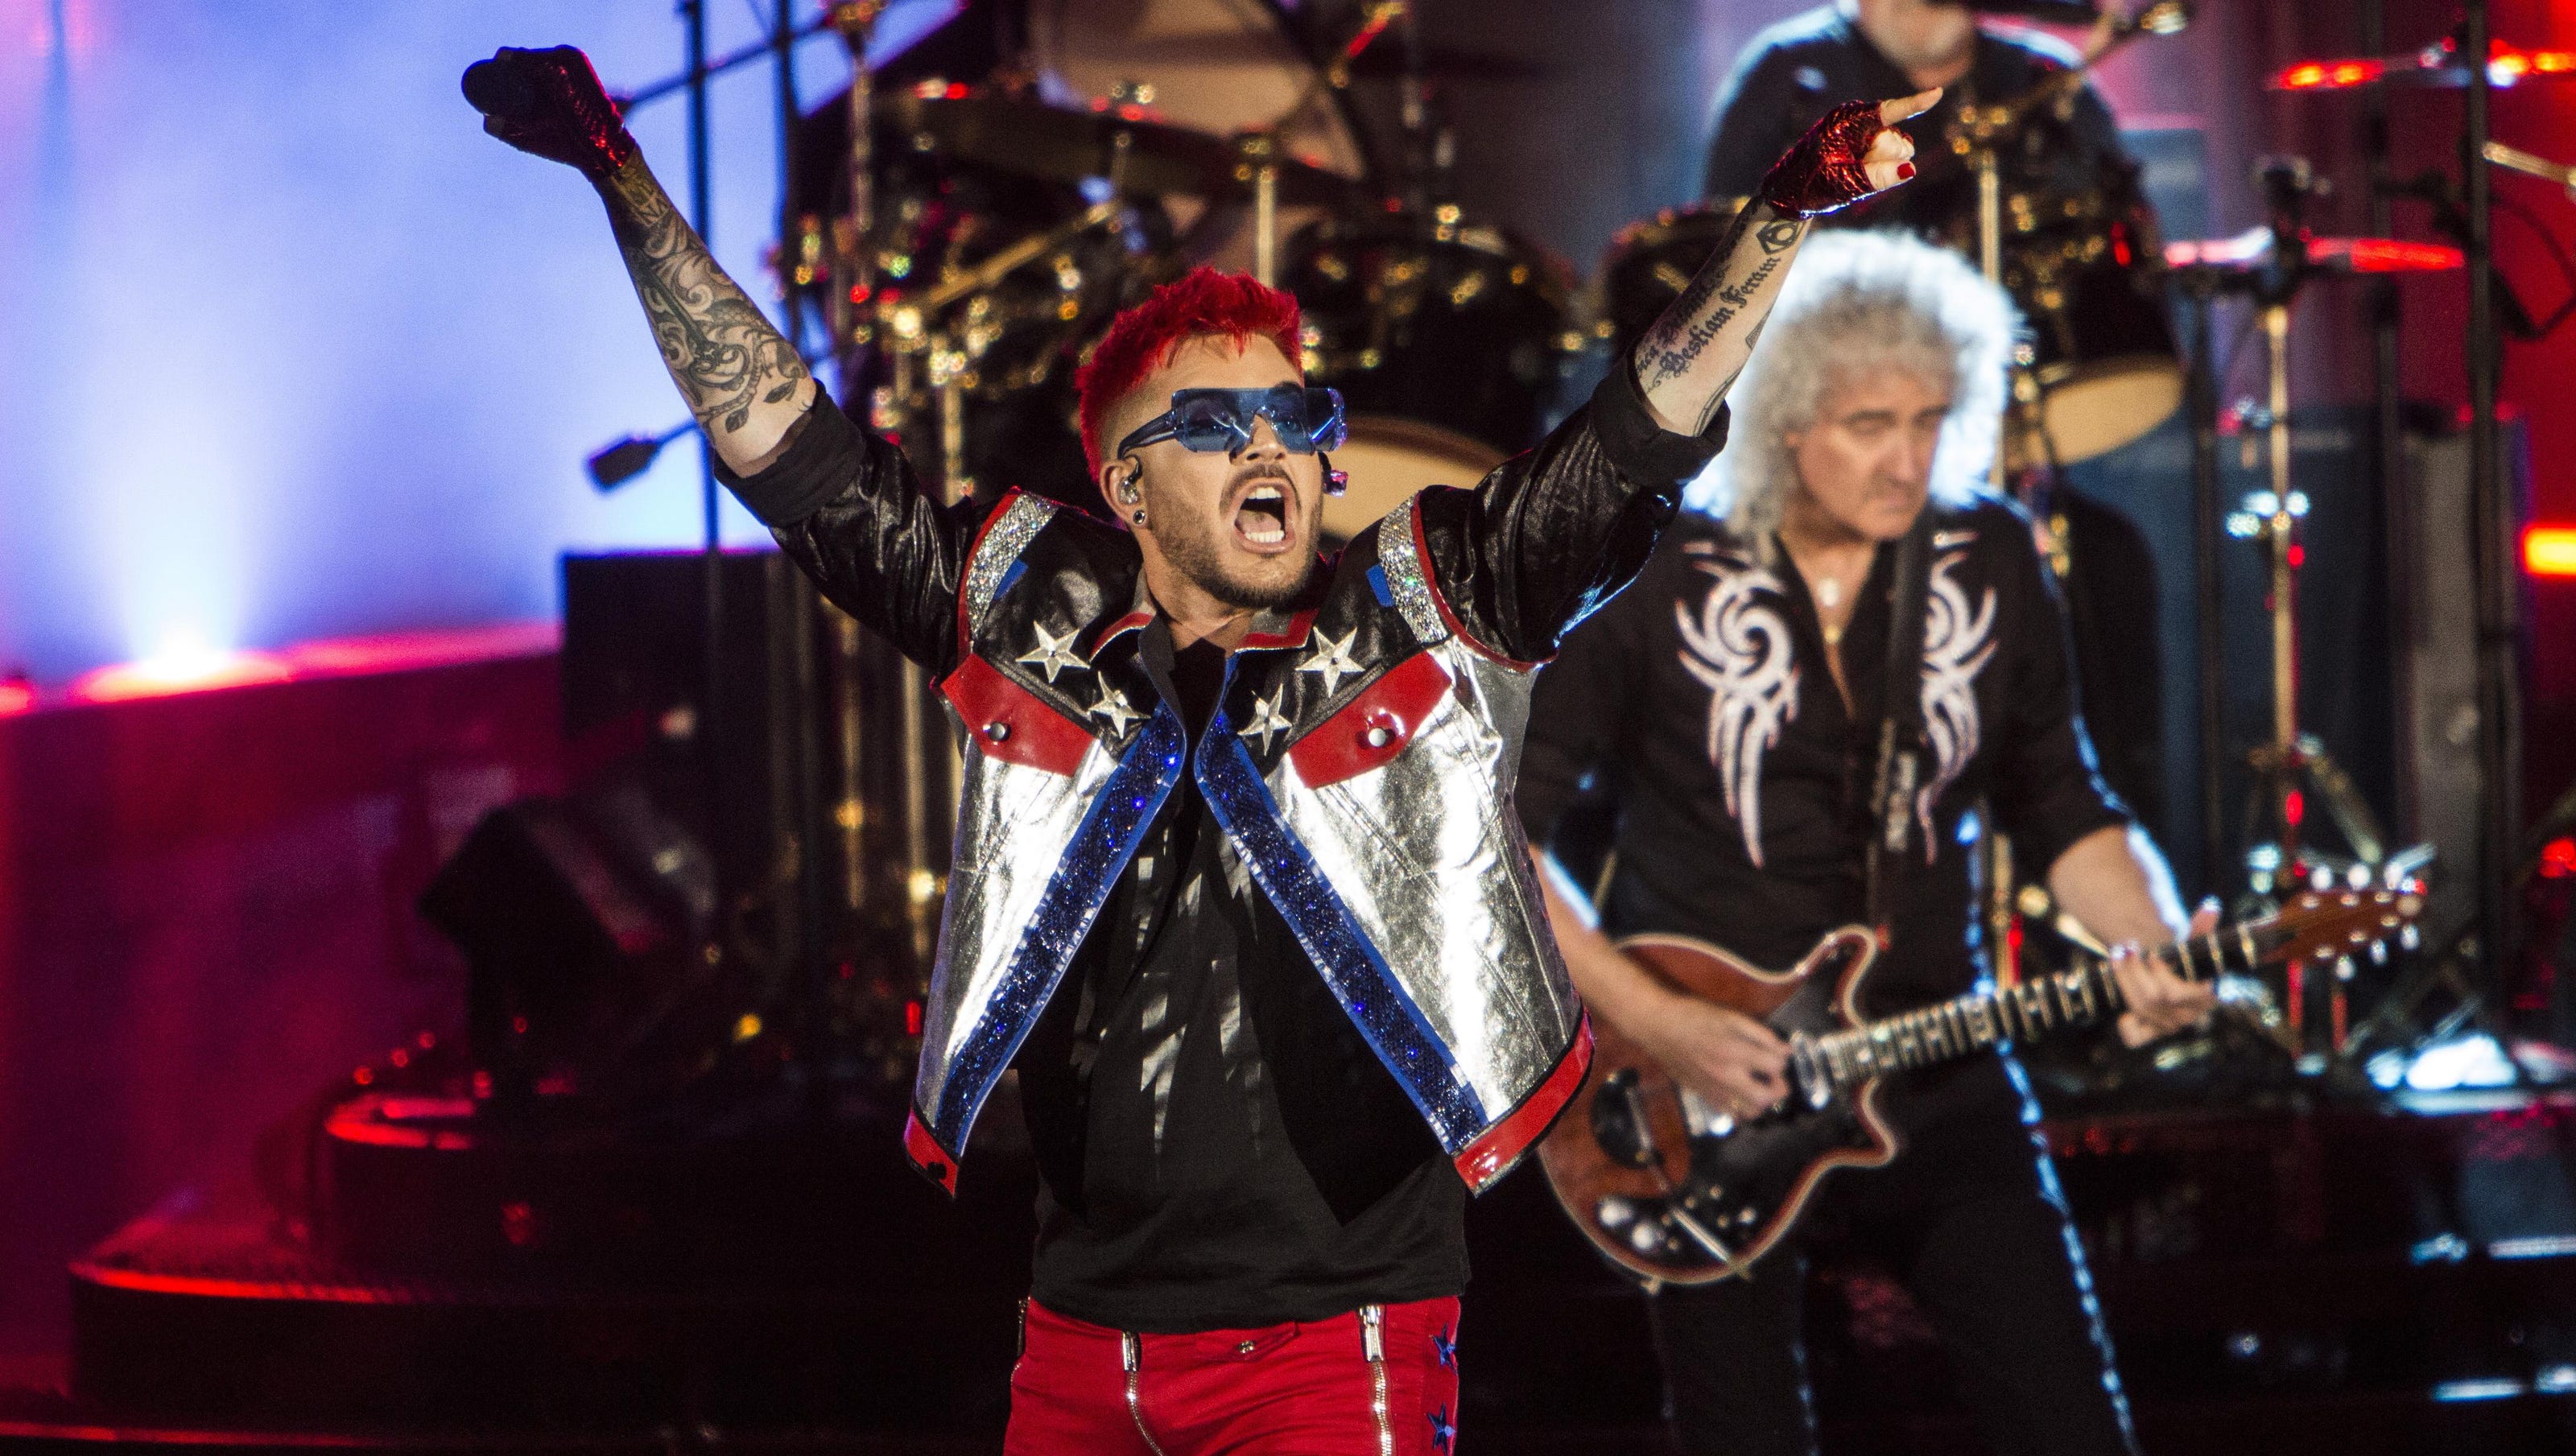 Adam Lambert finds the spirit, passion in Queen's music